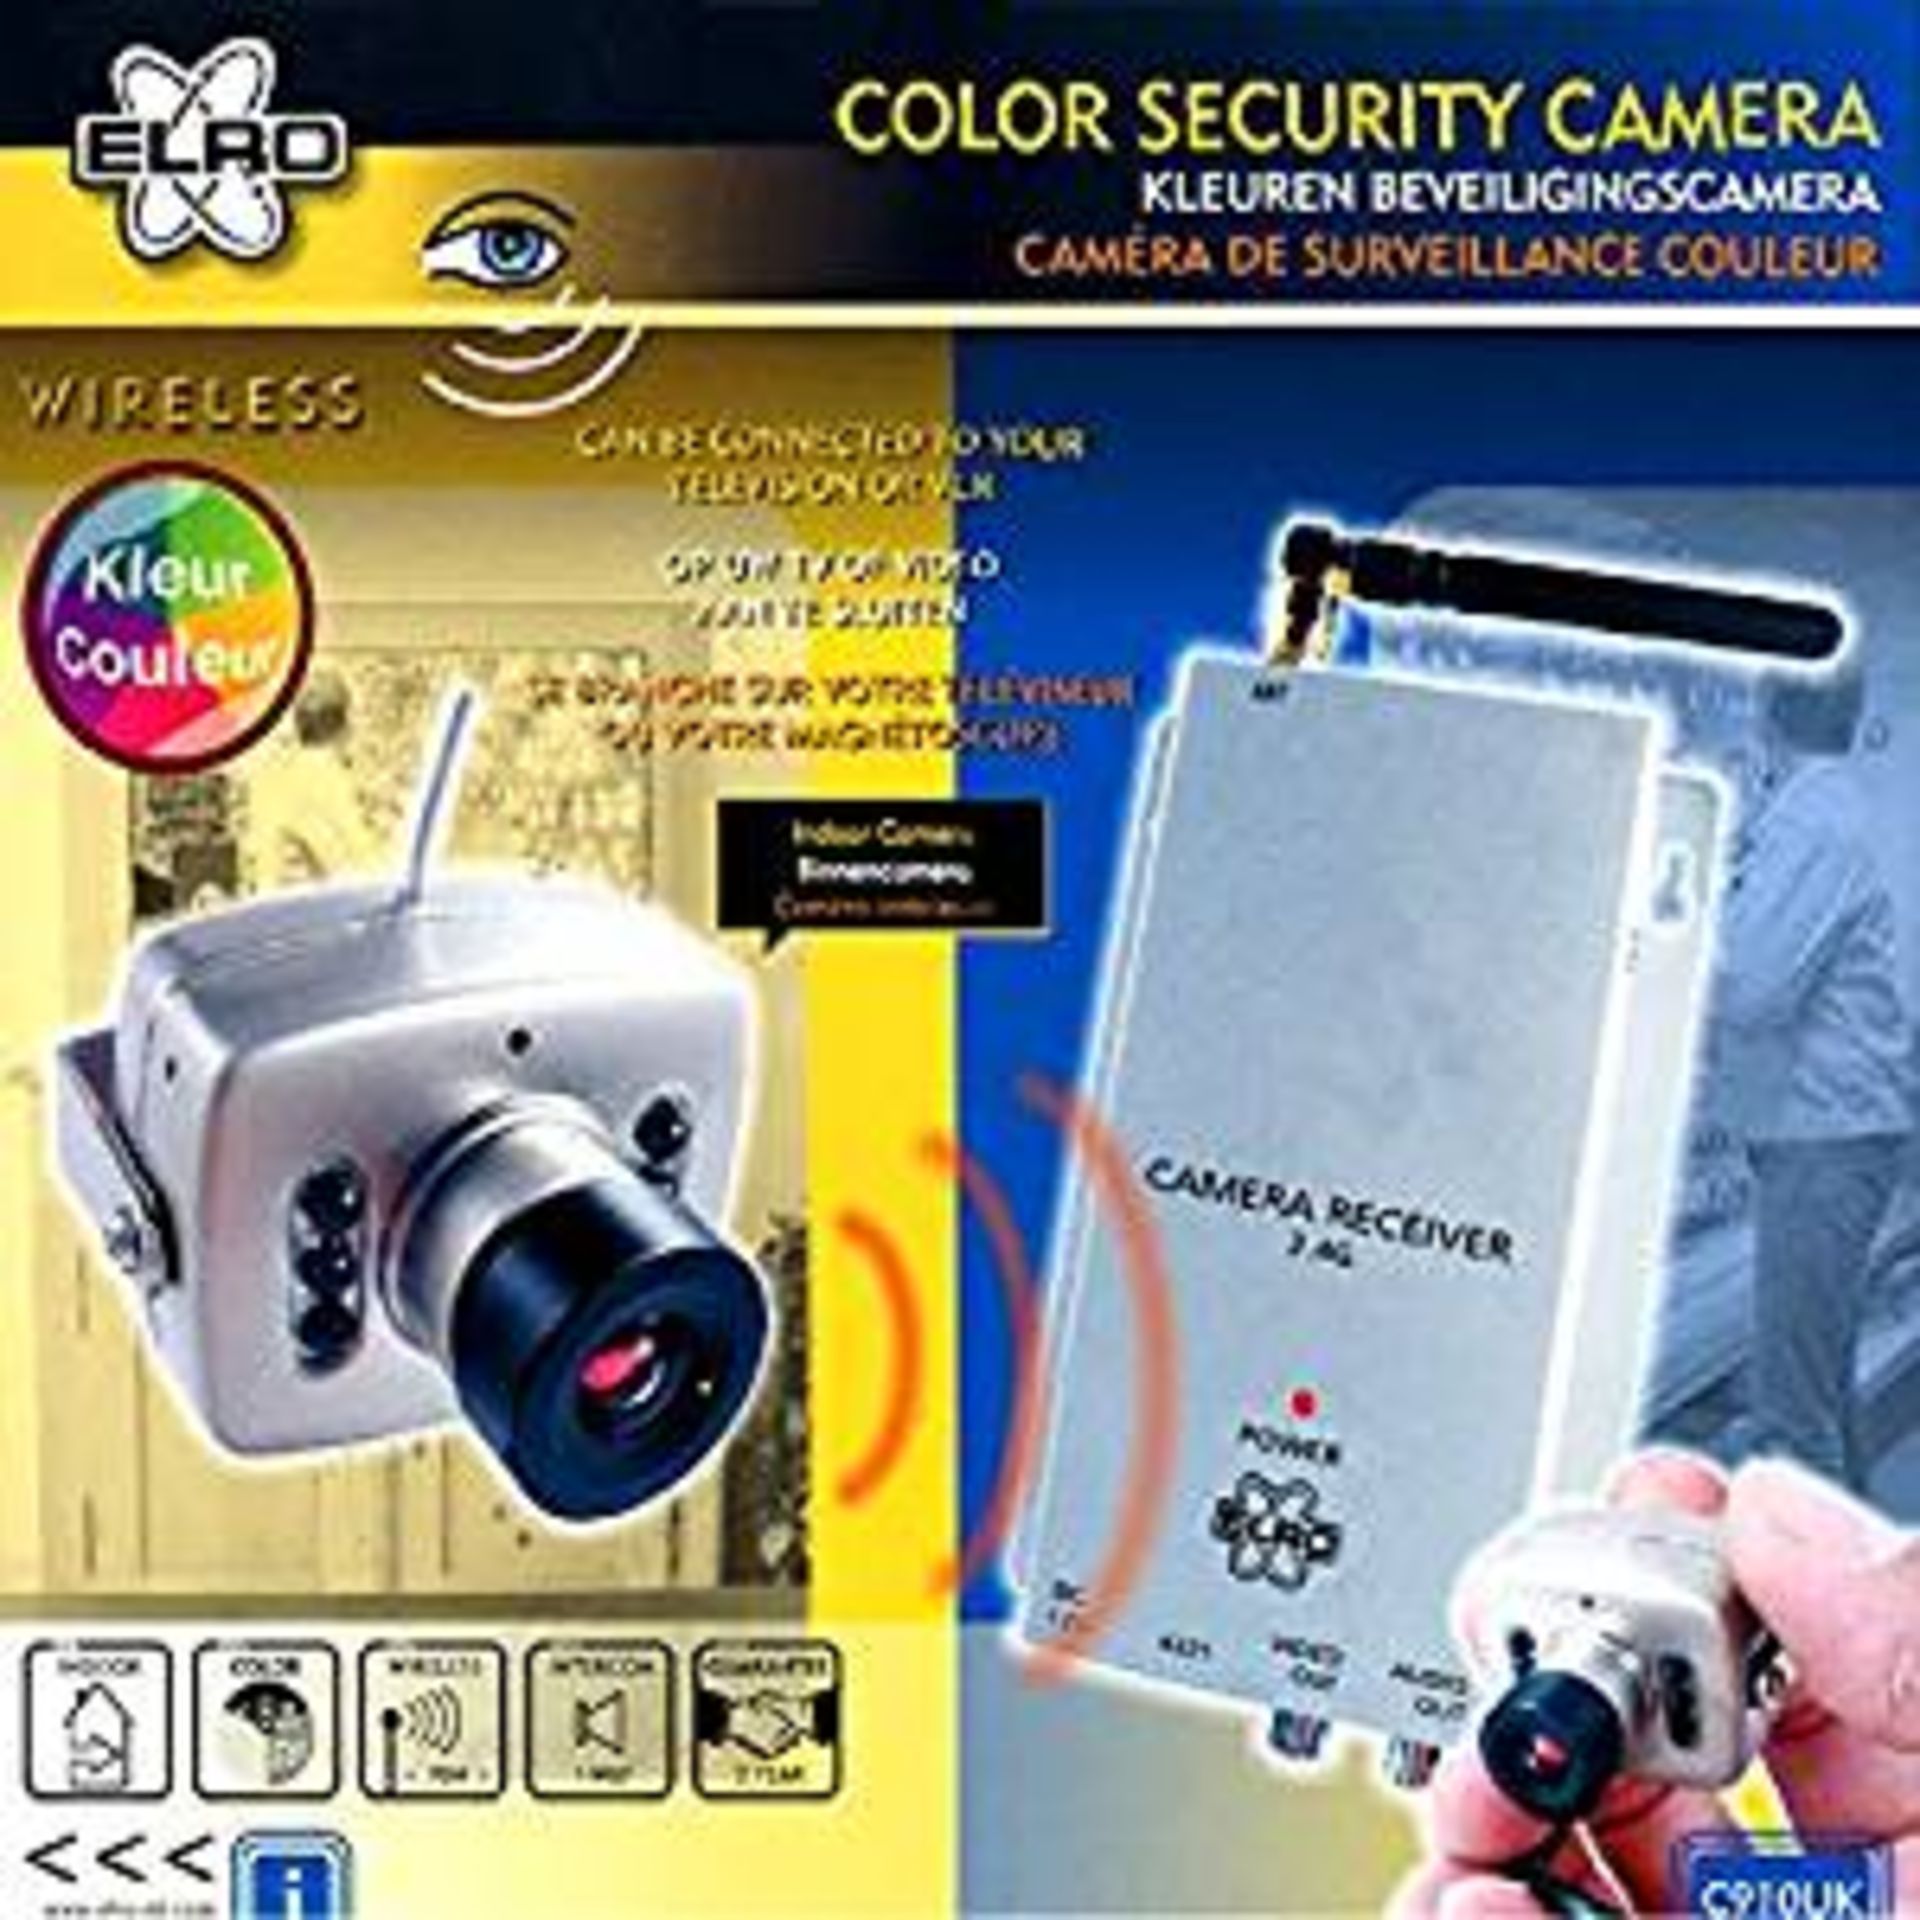 V *TRADE QTY* Brand New Wireless C910UK Colour Security Camera With Intercom ISP £39.99 (Amazon) X